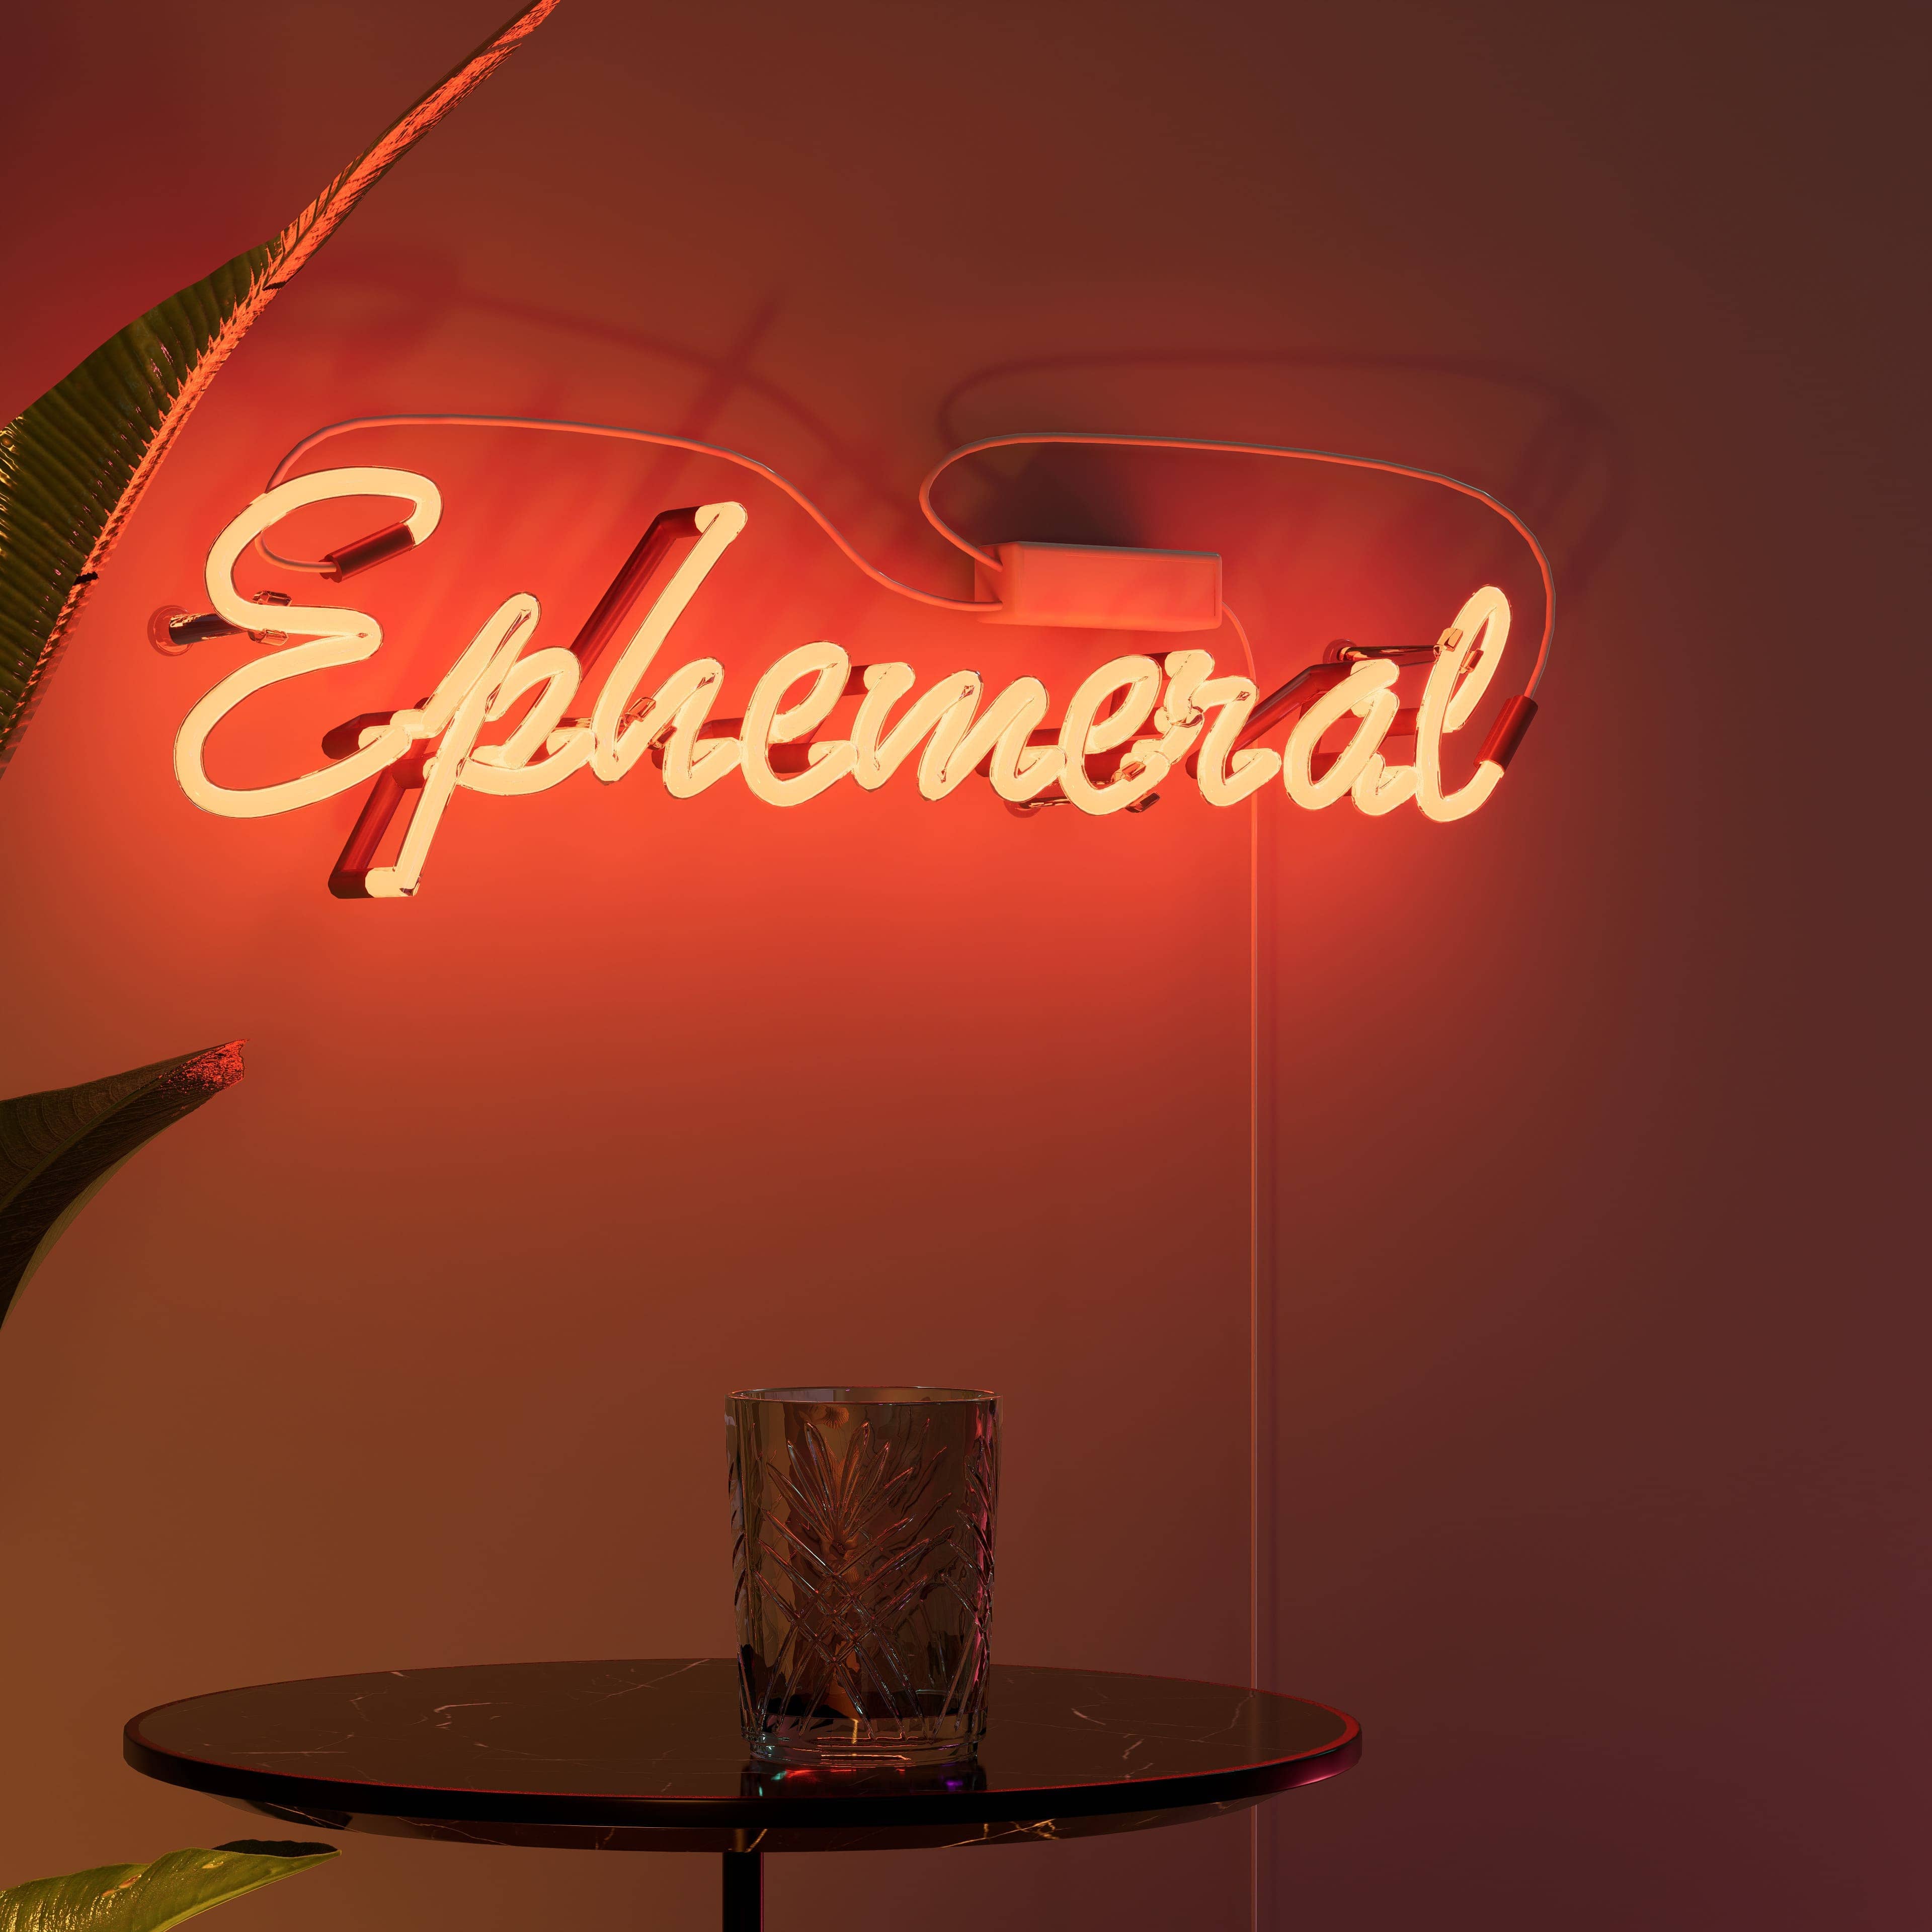 vintage-neon-signs-capture-the-essence-of-'ephemeral